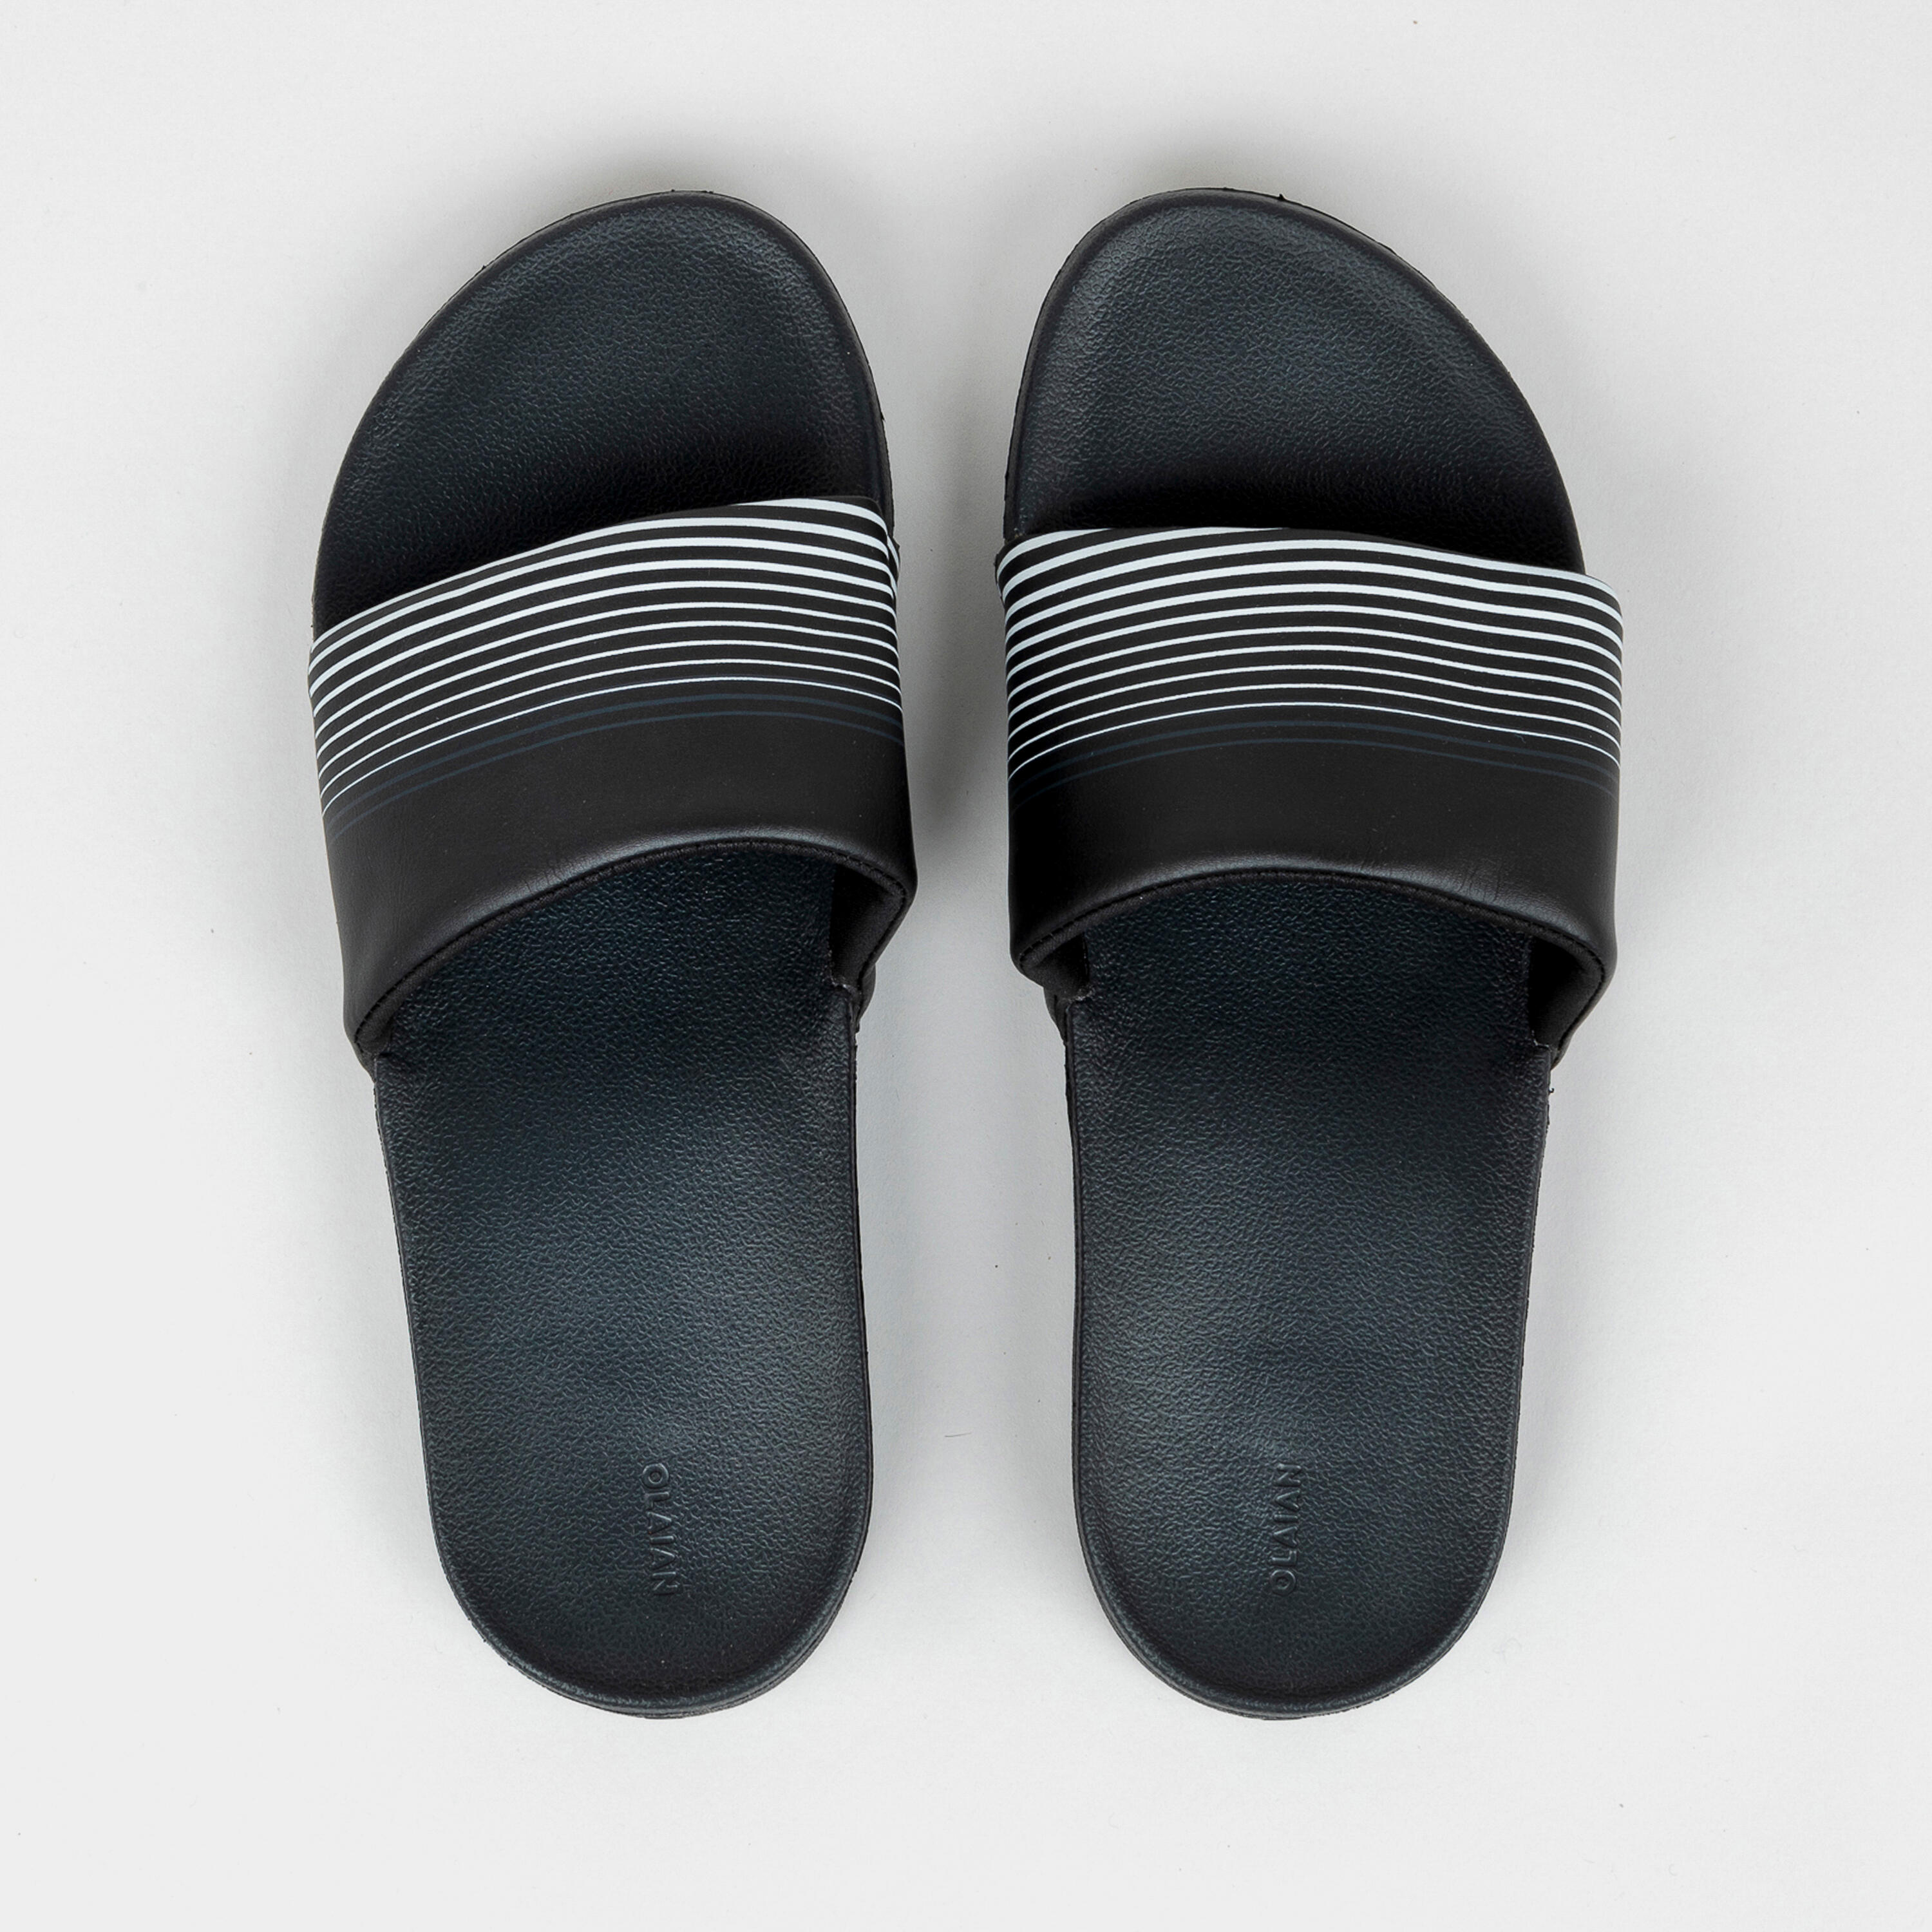 Men's Slide Sandals - 550 - smoked black, graphite grey - Olaian ...